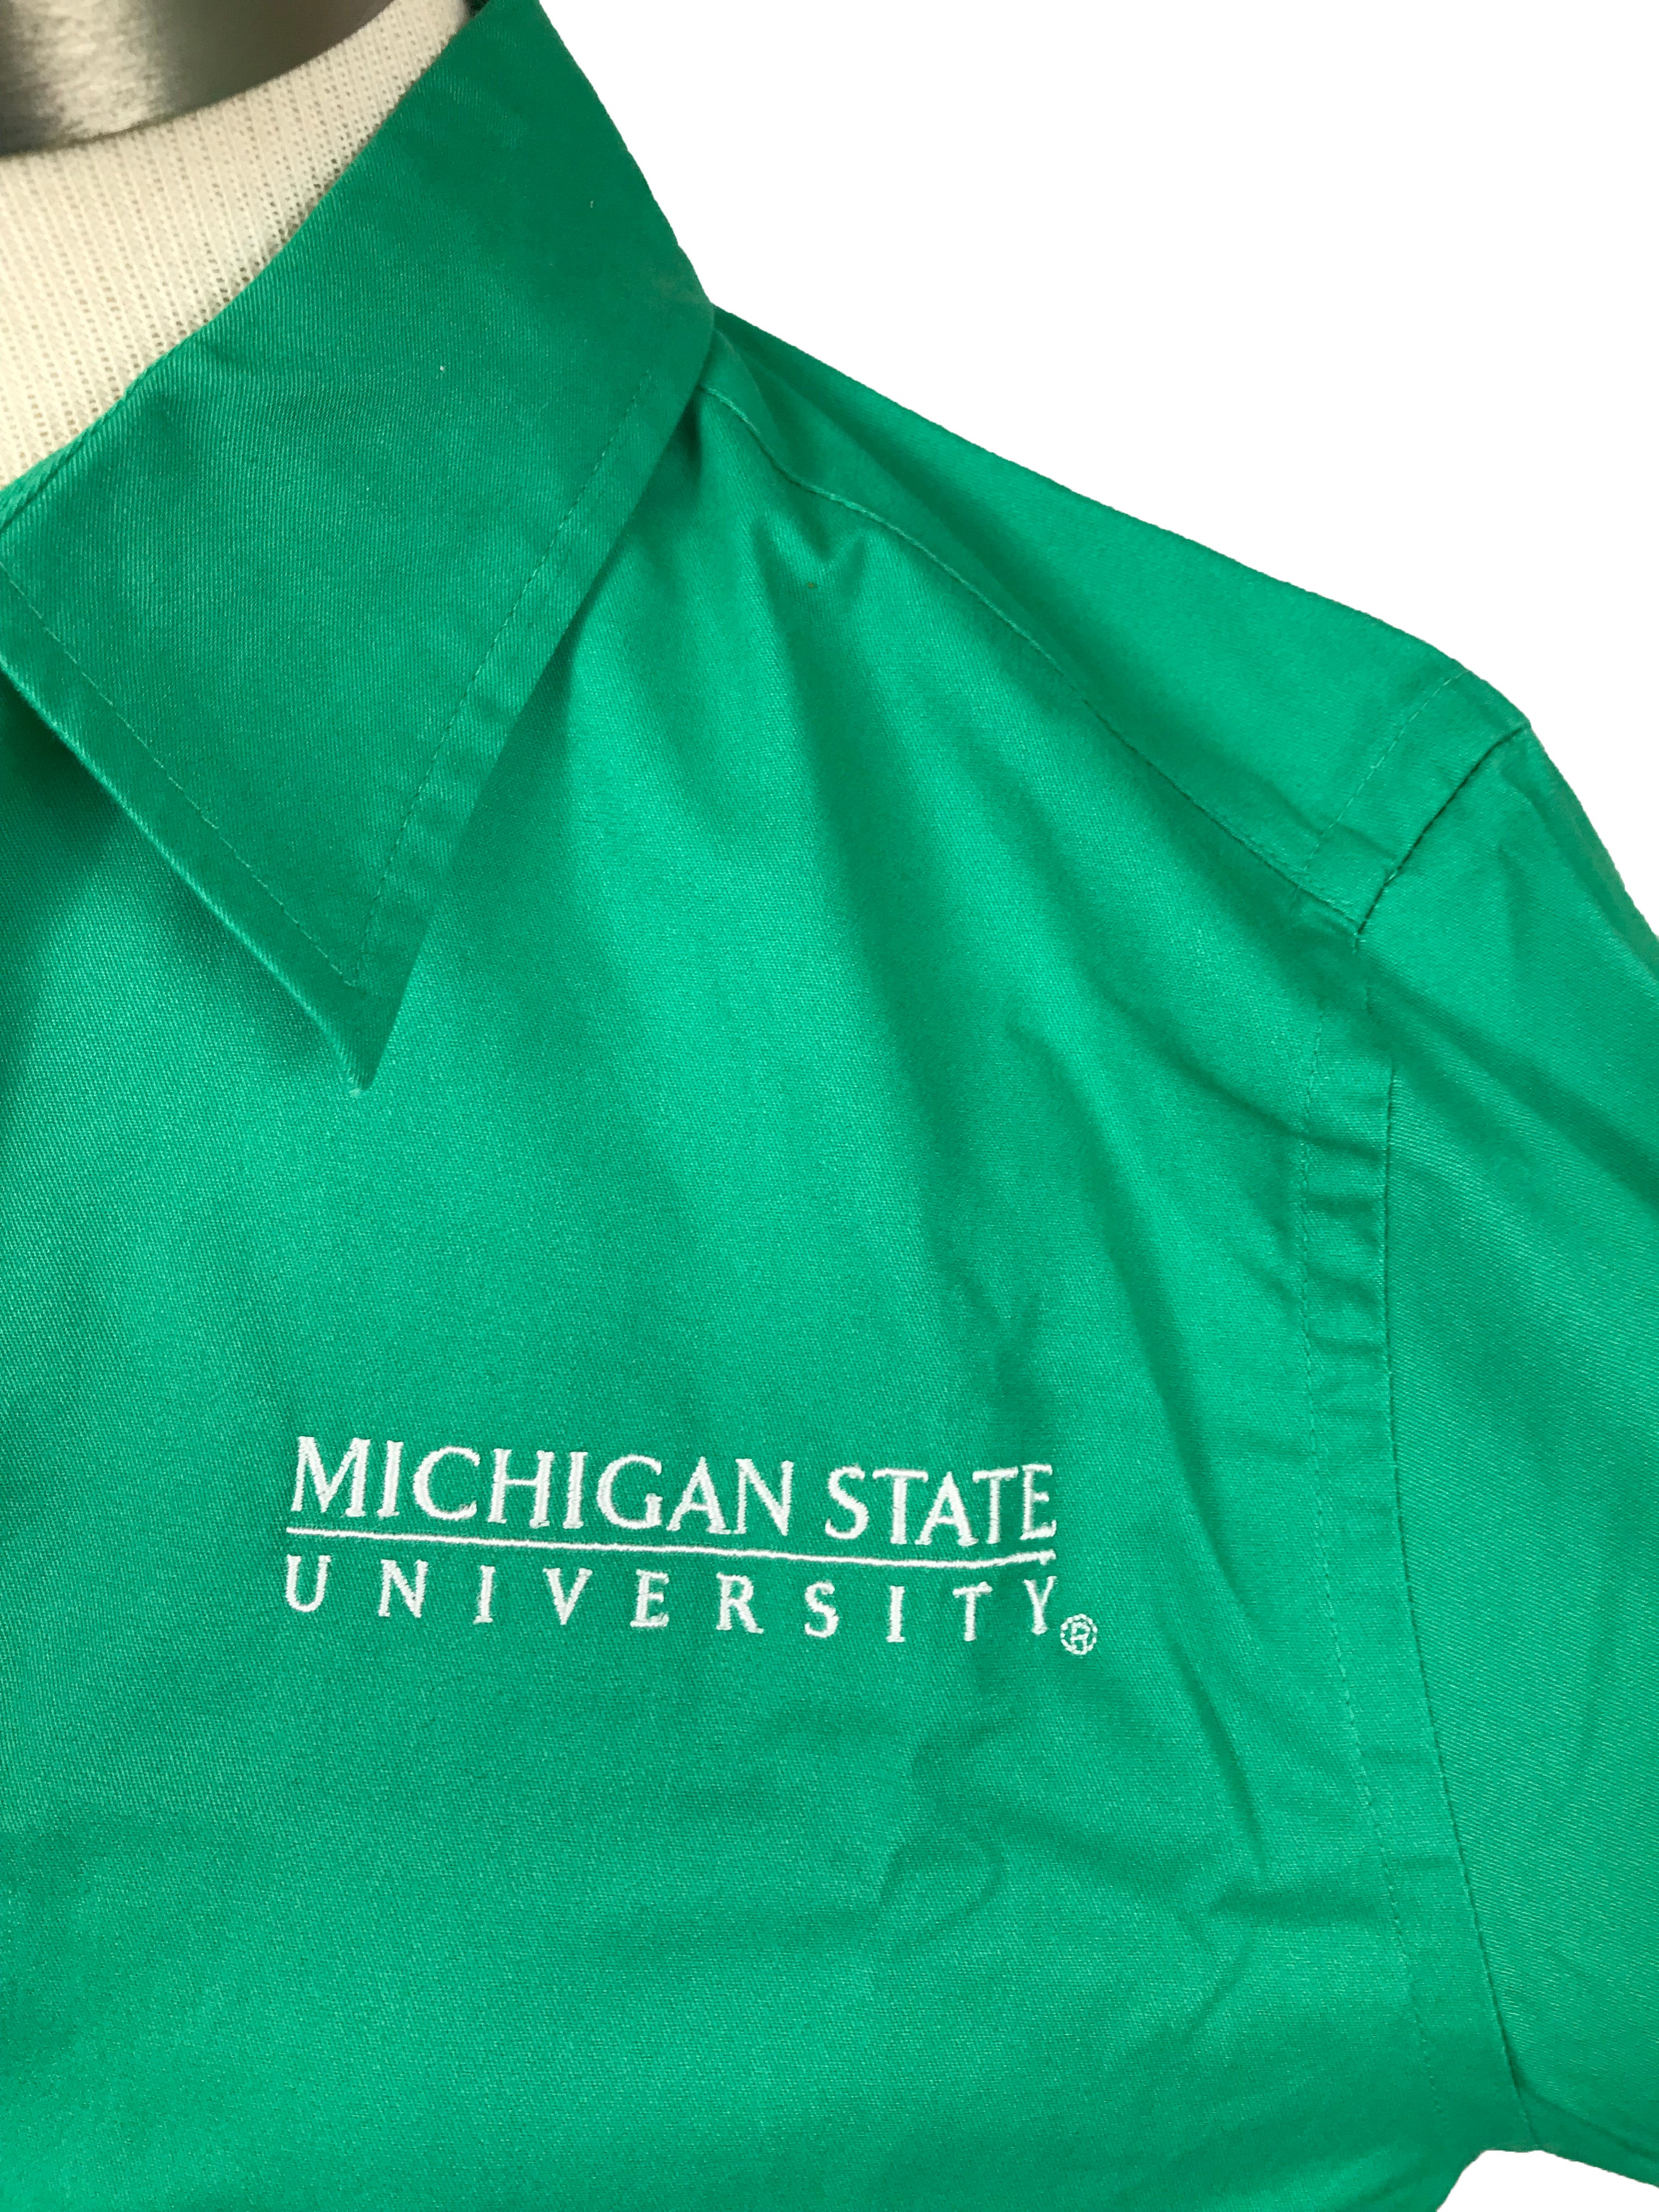 Michigan State University Green Button Down Shirt Women's Size M